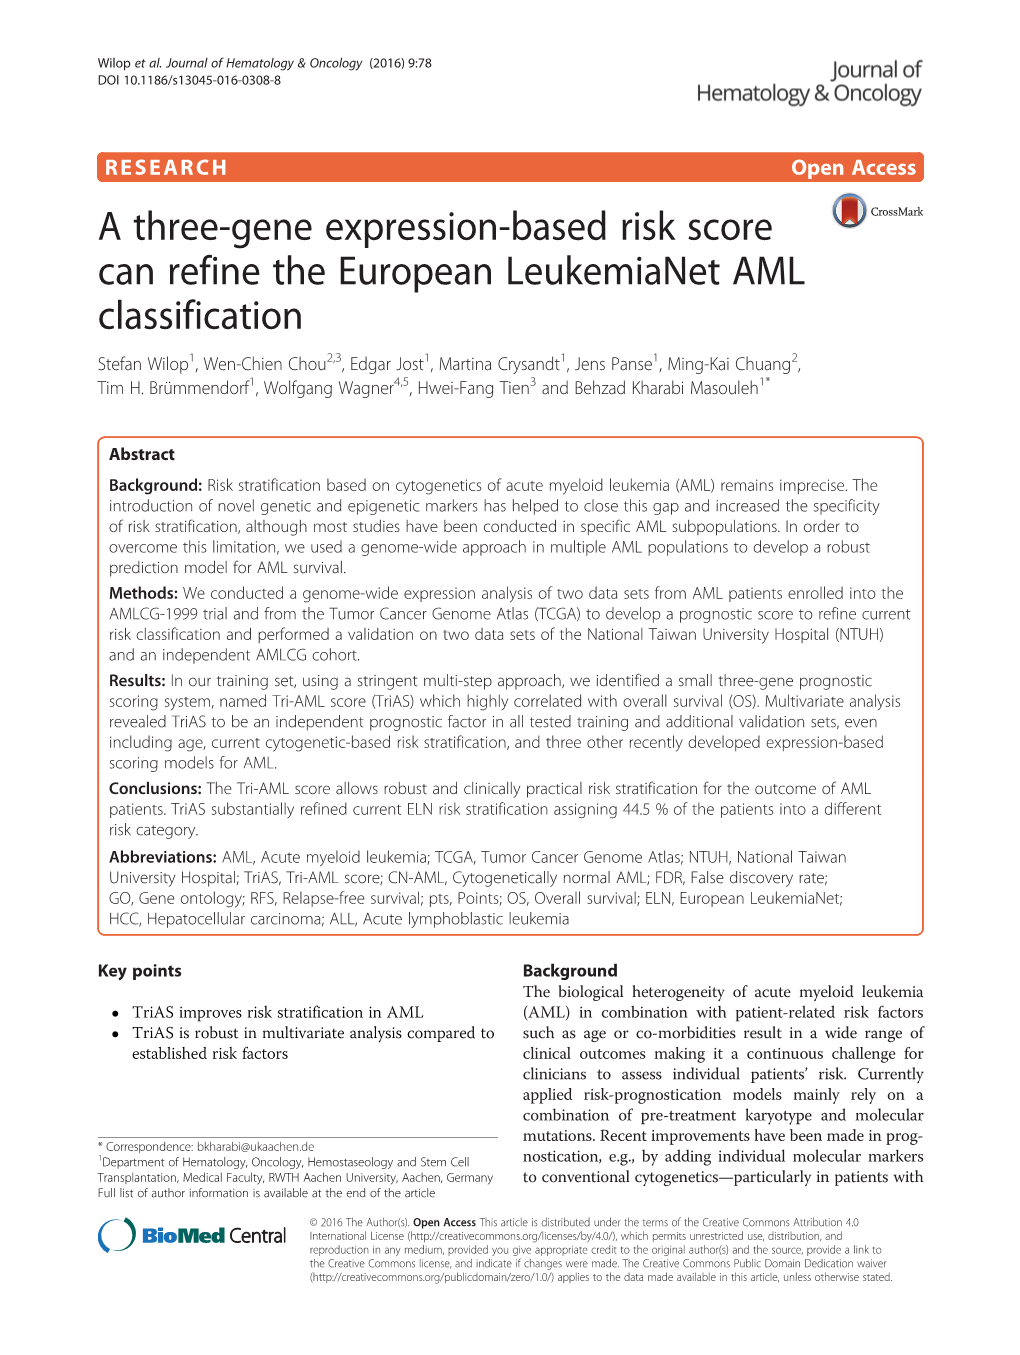 A Three-Gene Expression-Based Risk Score Can Refine the European Leukemianet AML Classification